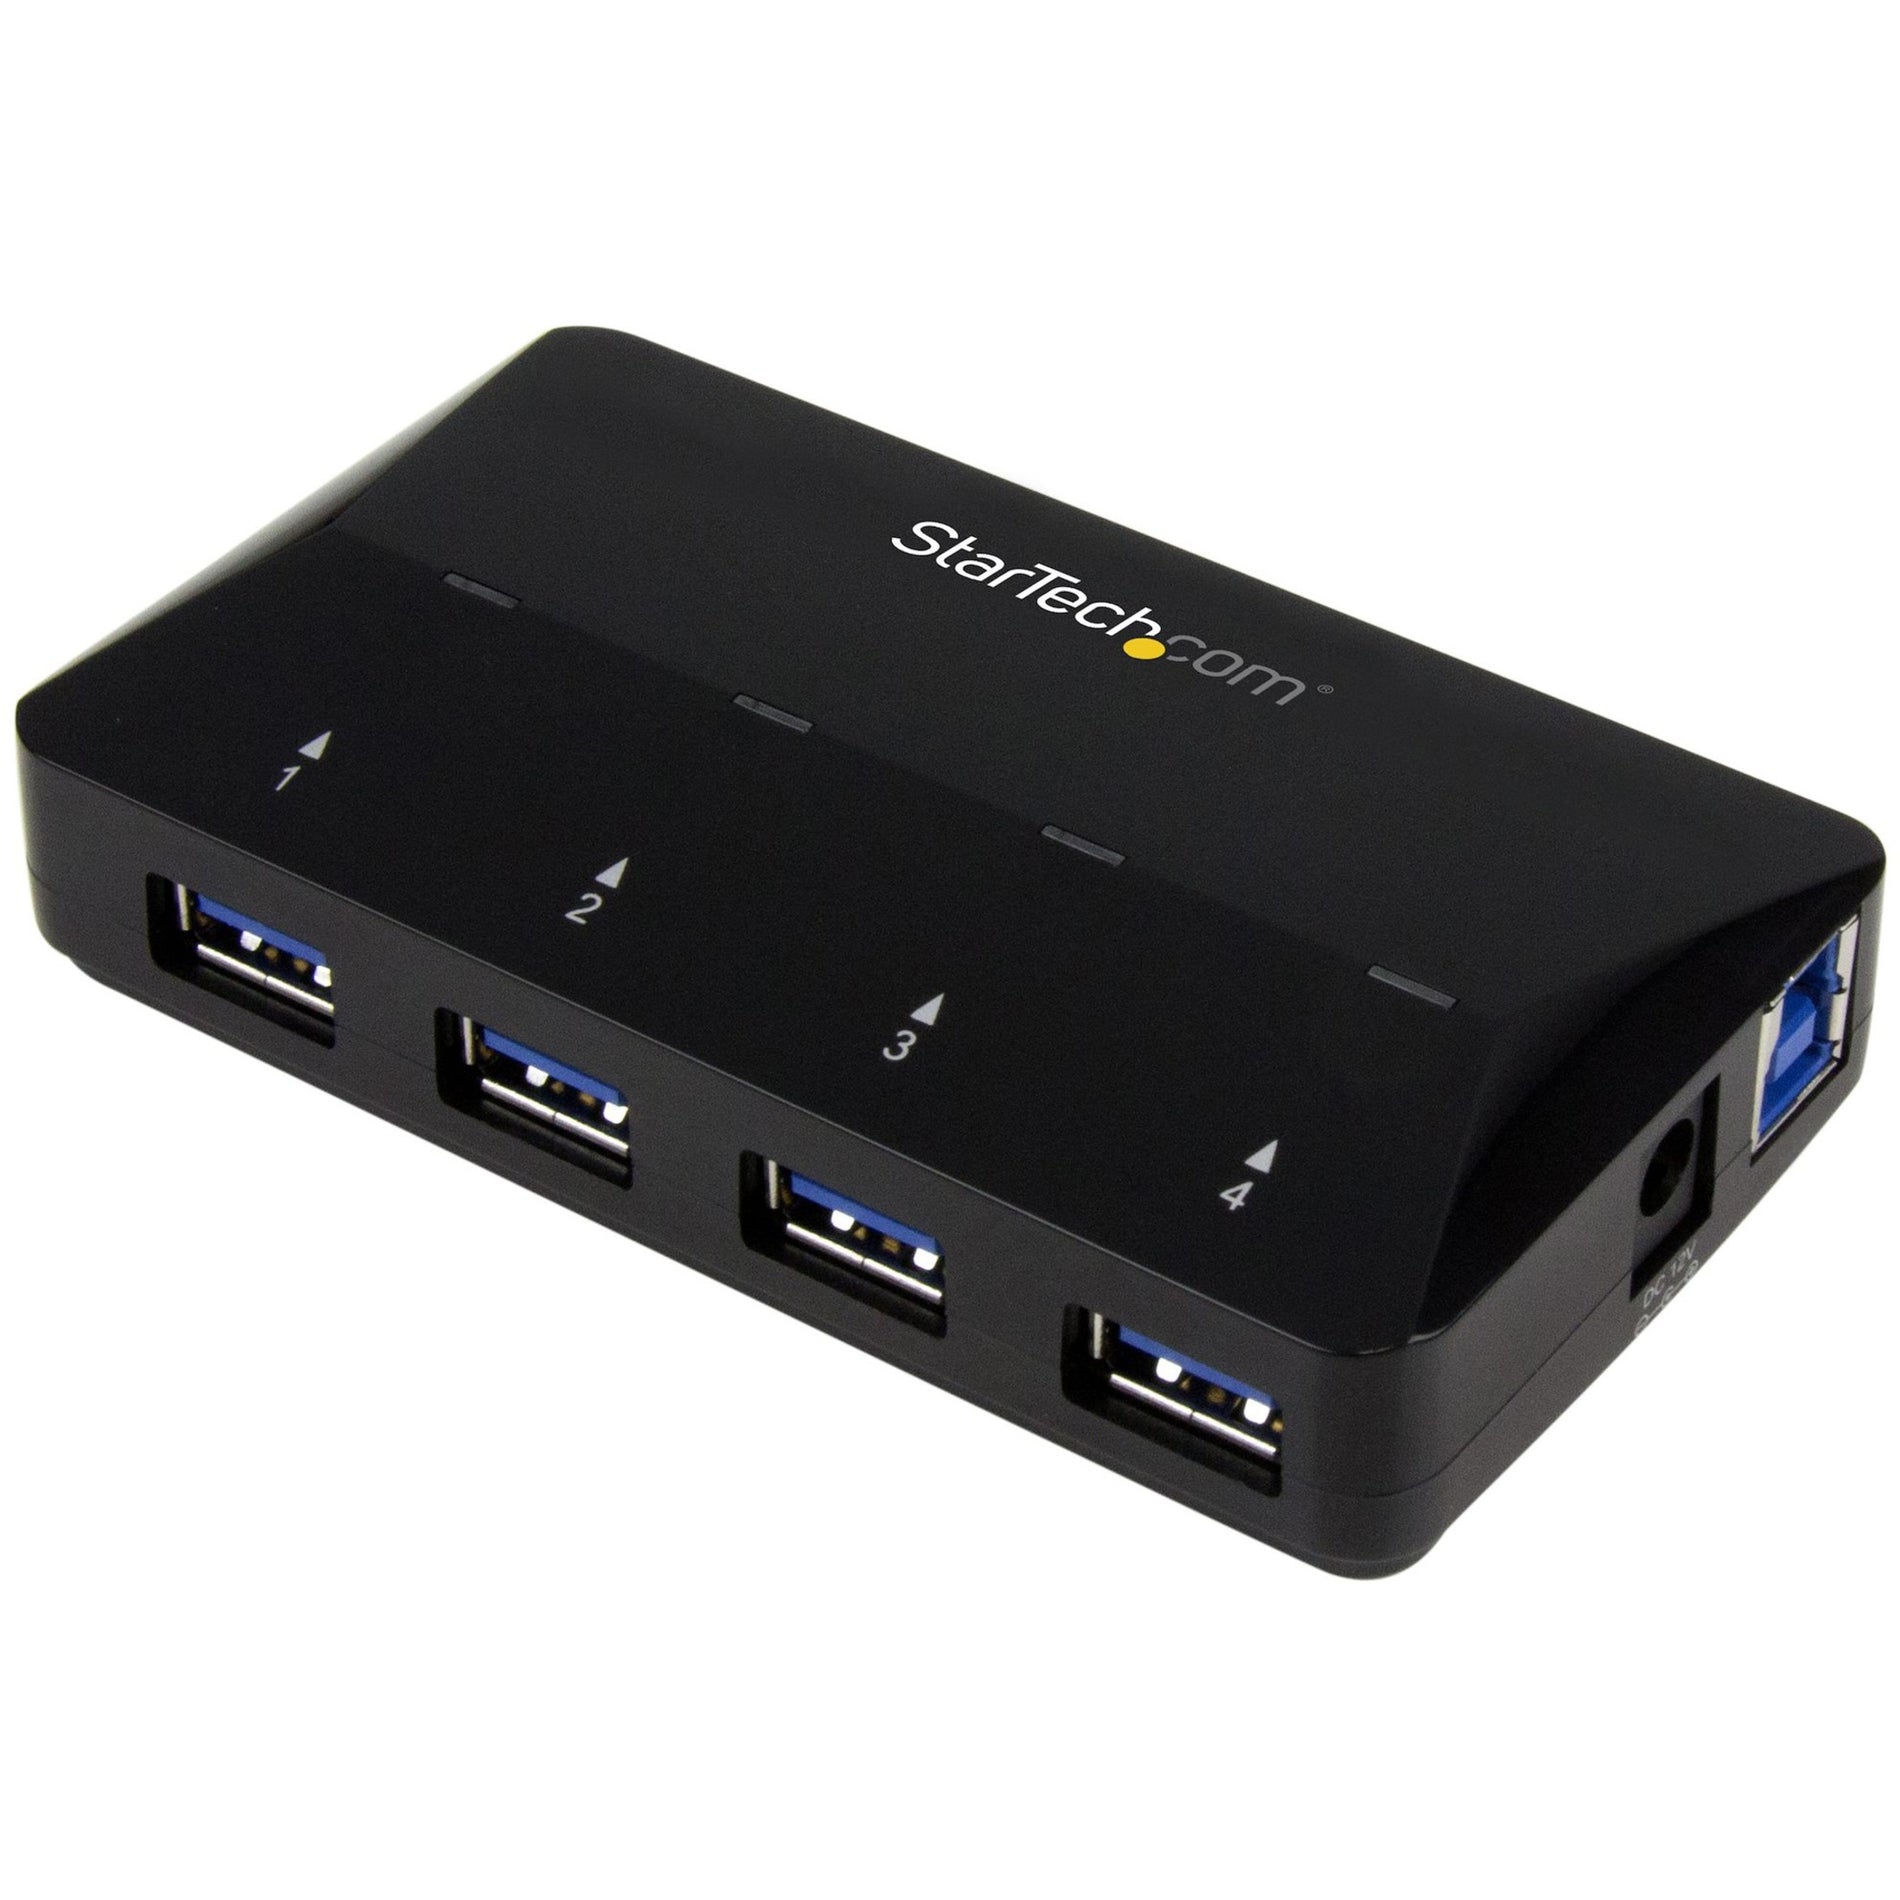 StarTech.com ST53004U1C 4-Port USB 3.0 Hub plus Dedicated Charging Port - Fast-Charging Station, Desktop USB Hub